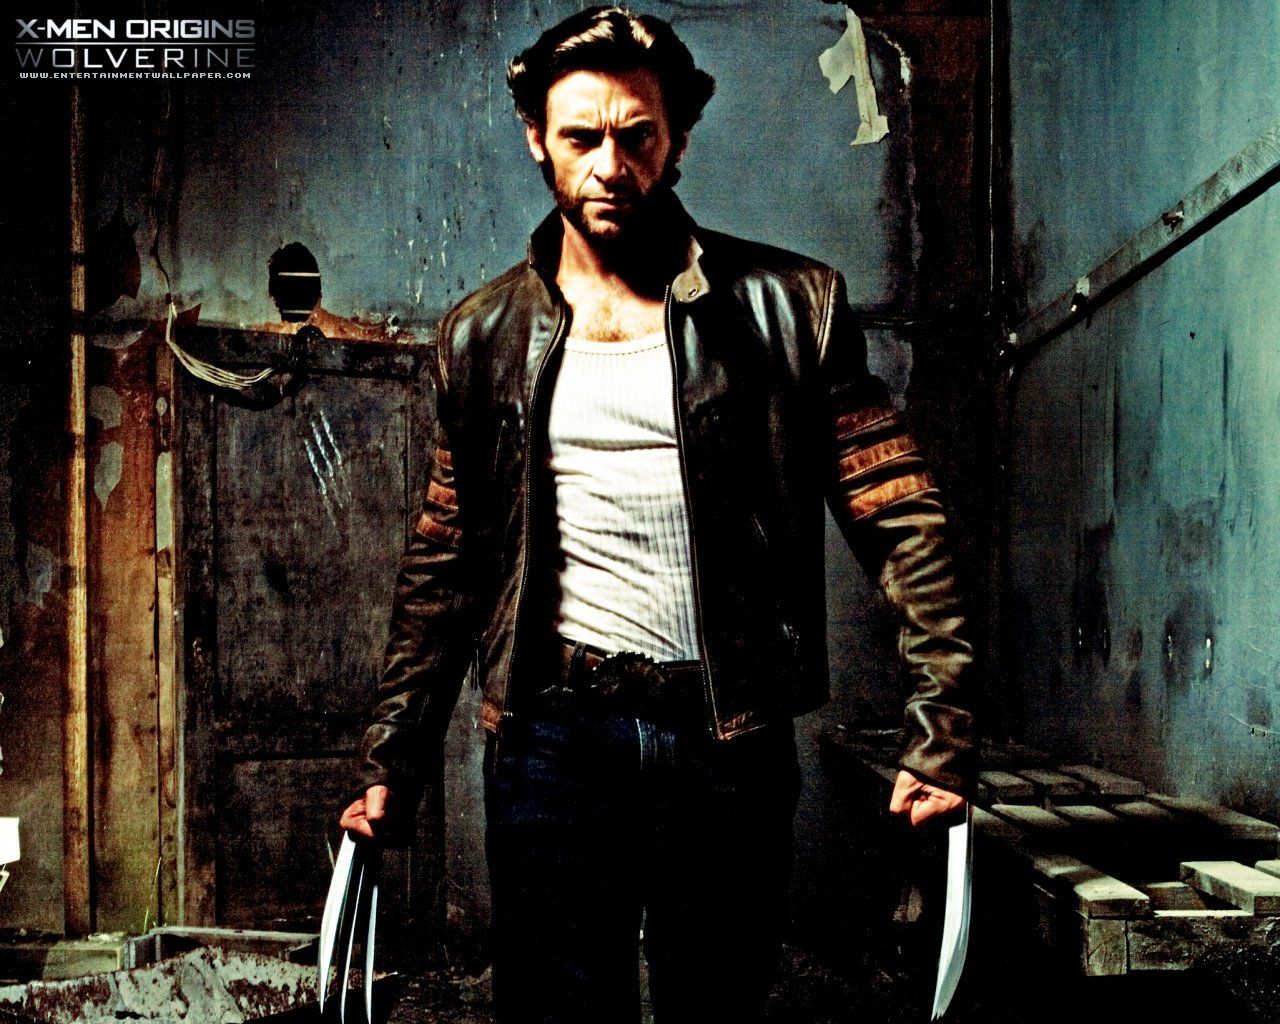 X-Men.Origins.Wolverine-Movie.HQ.Wallpapers - Photo 2 of 35 ...